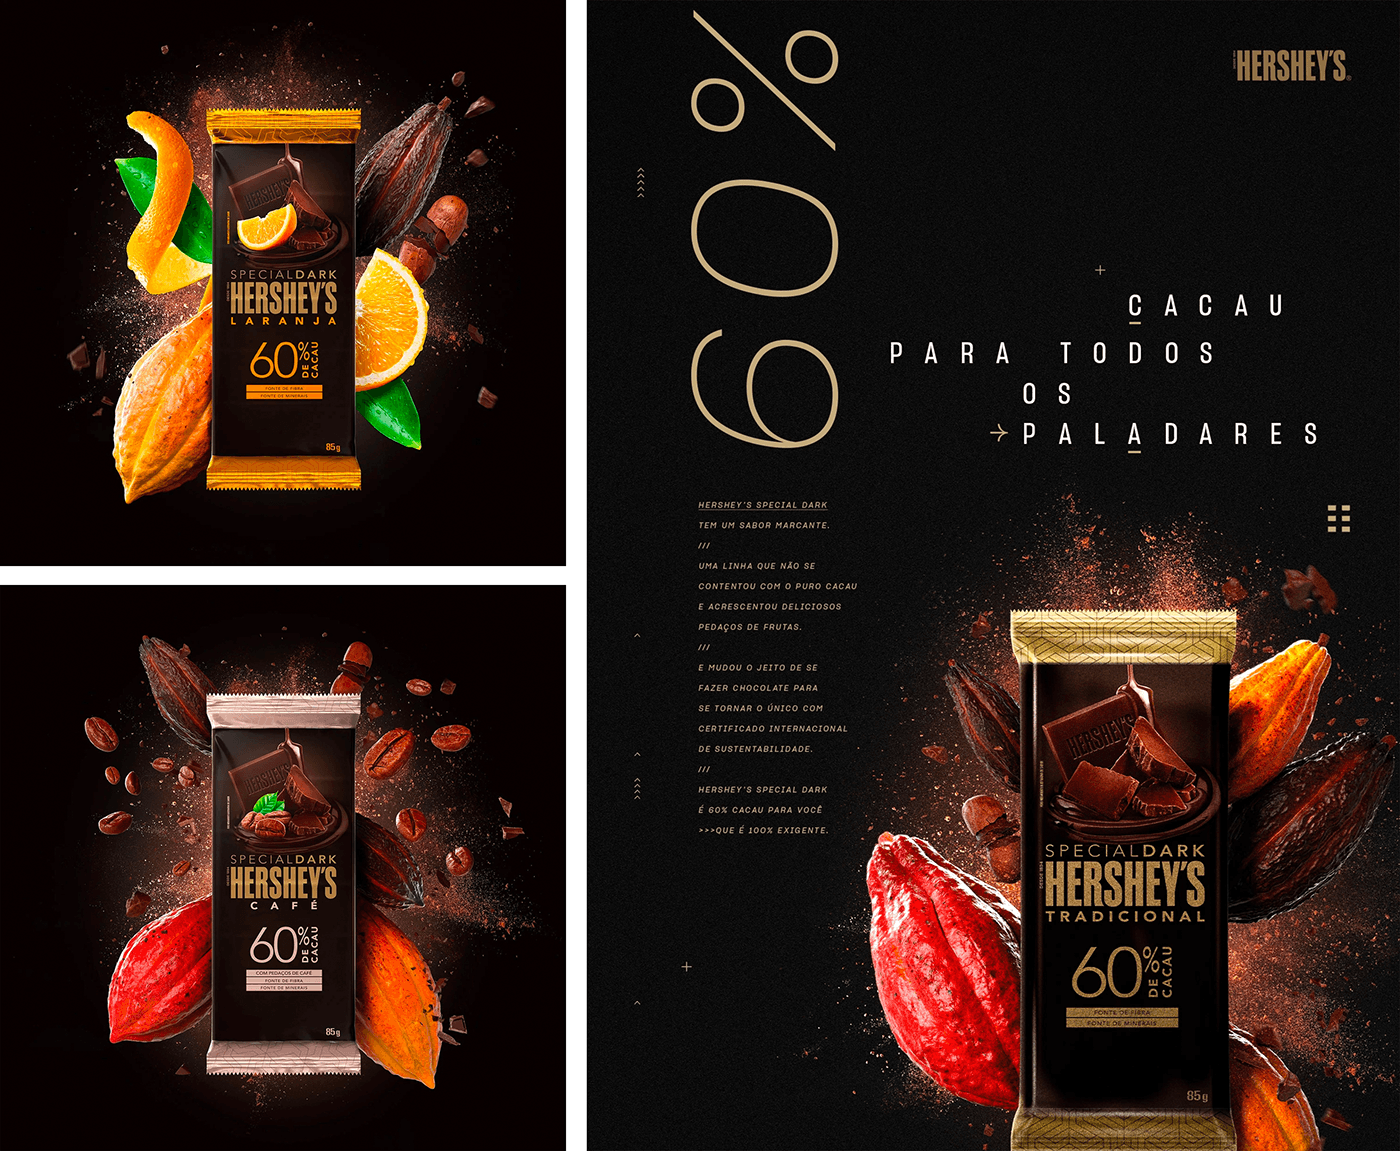 hershey's hersheys chocolate chocolate packaging Cacau Cocoa comercial Advertising  ad betc